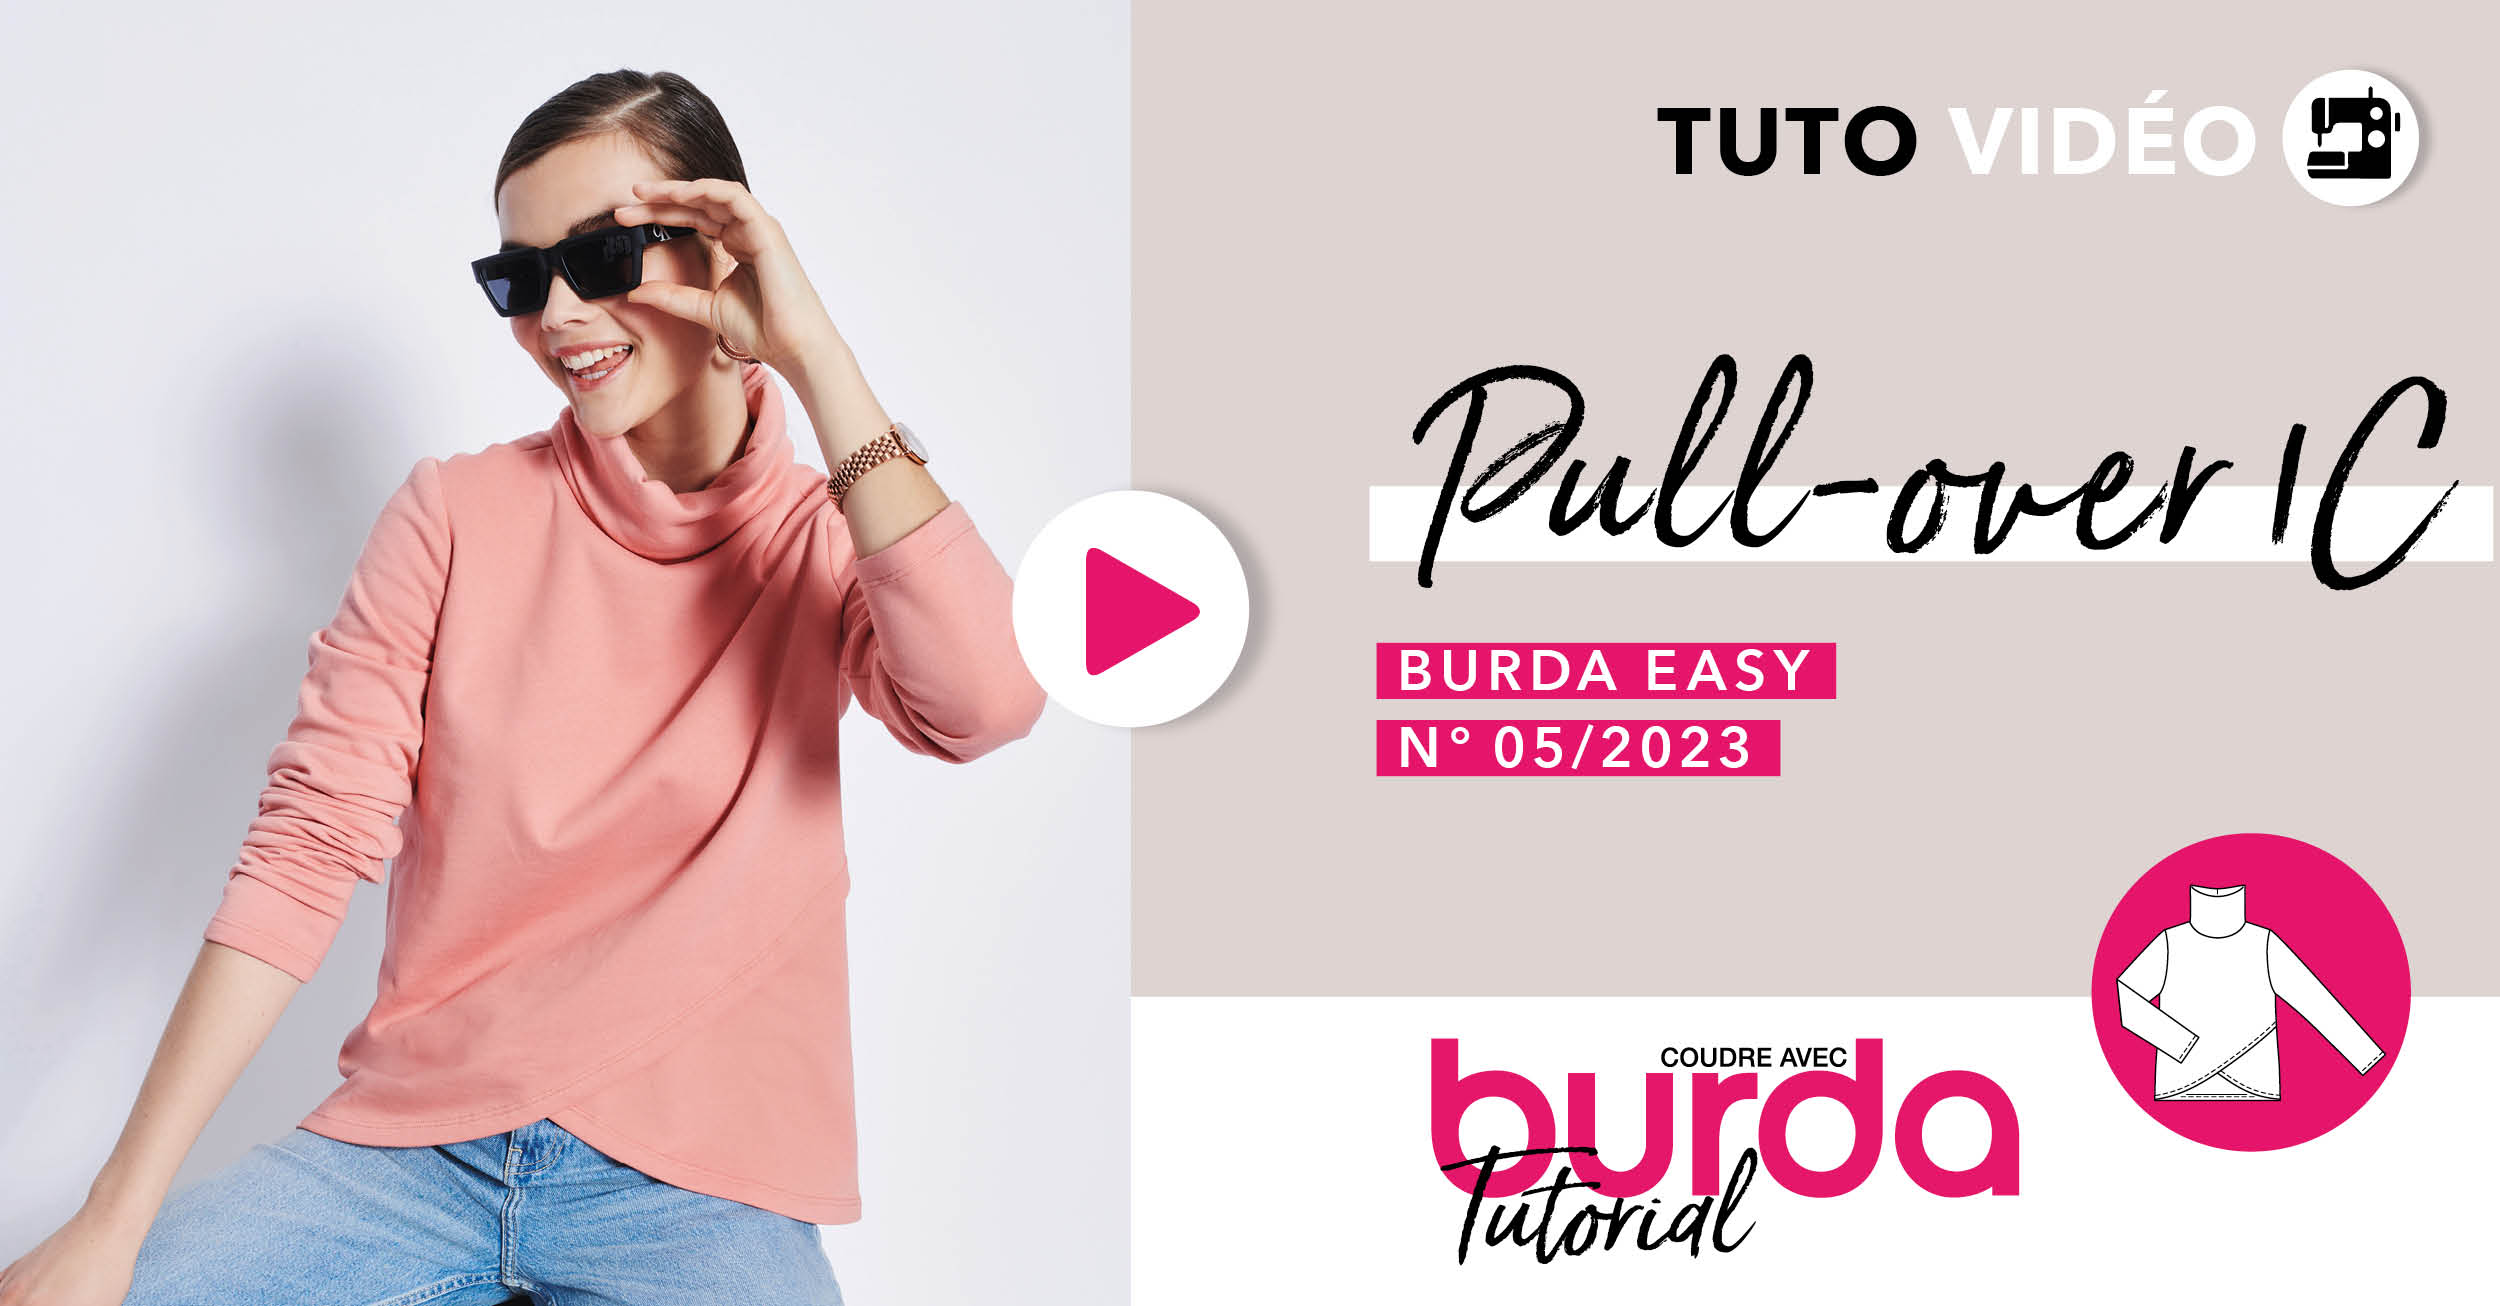 Tuto vidéo : Pull-over 1C - burda easy n°5 septembre/octobre 2023